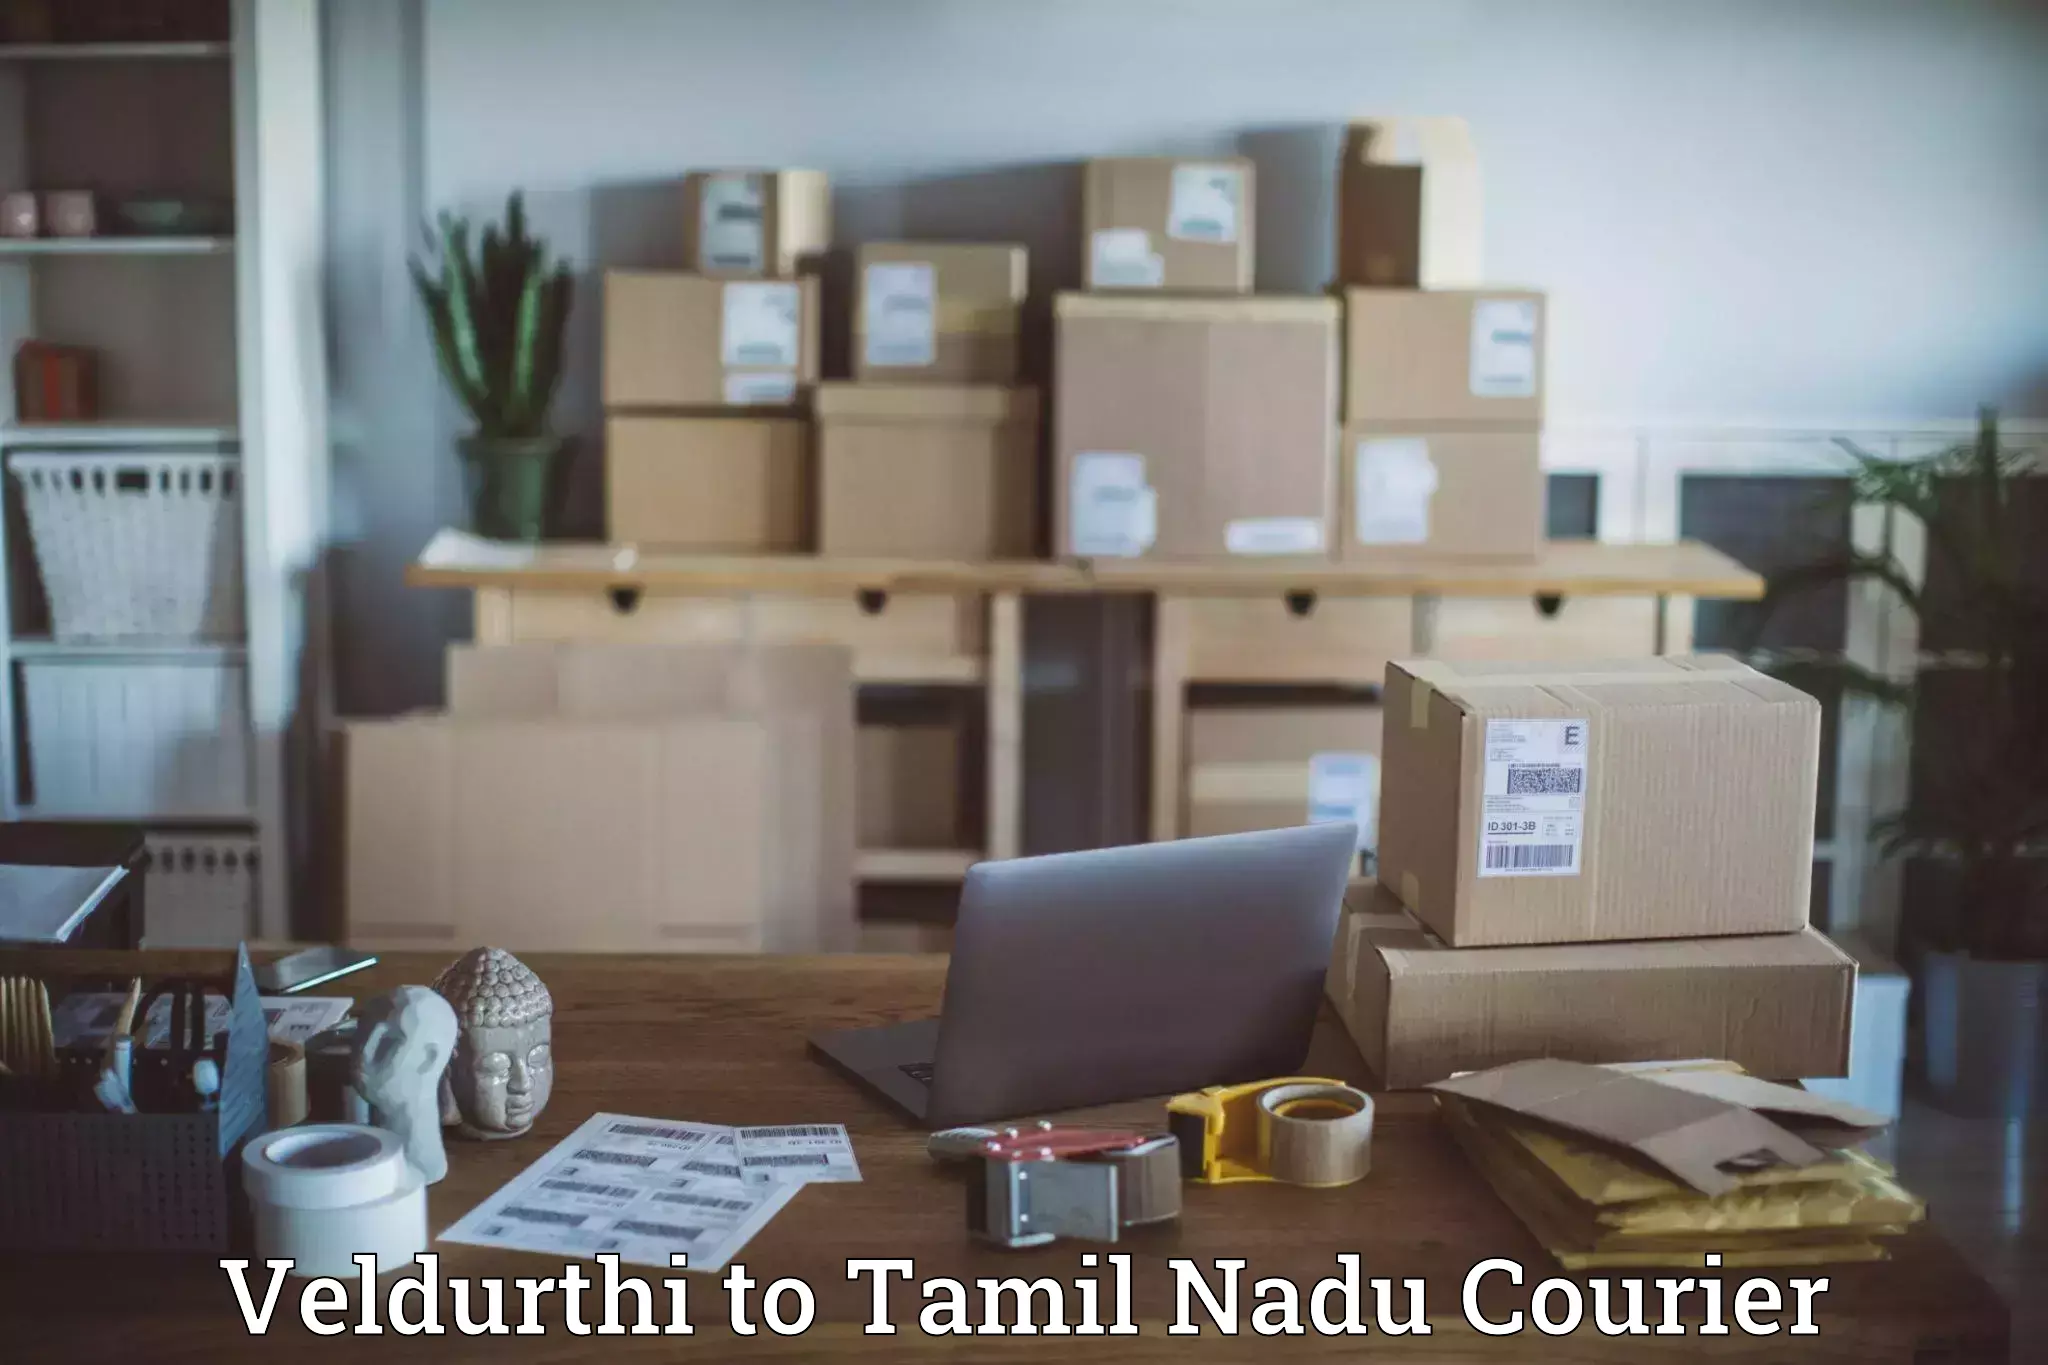 Express package handling Veldurthi to Tamil Nadu